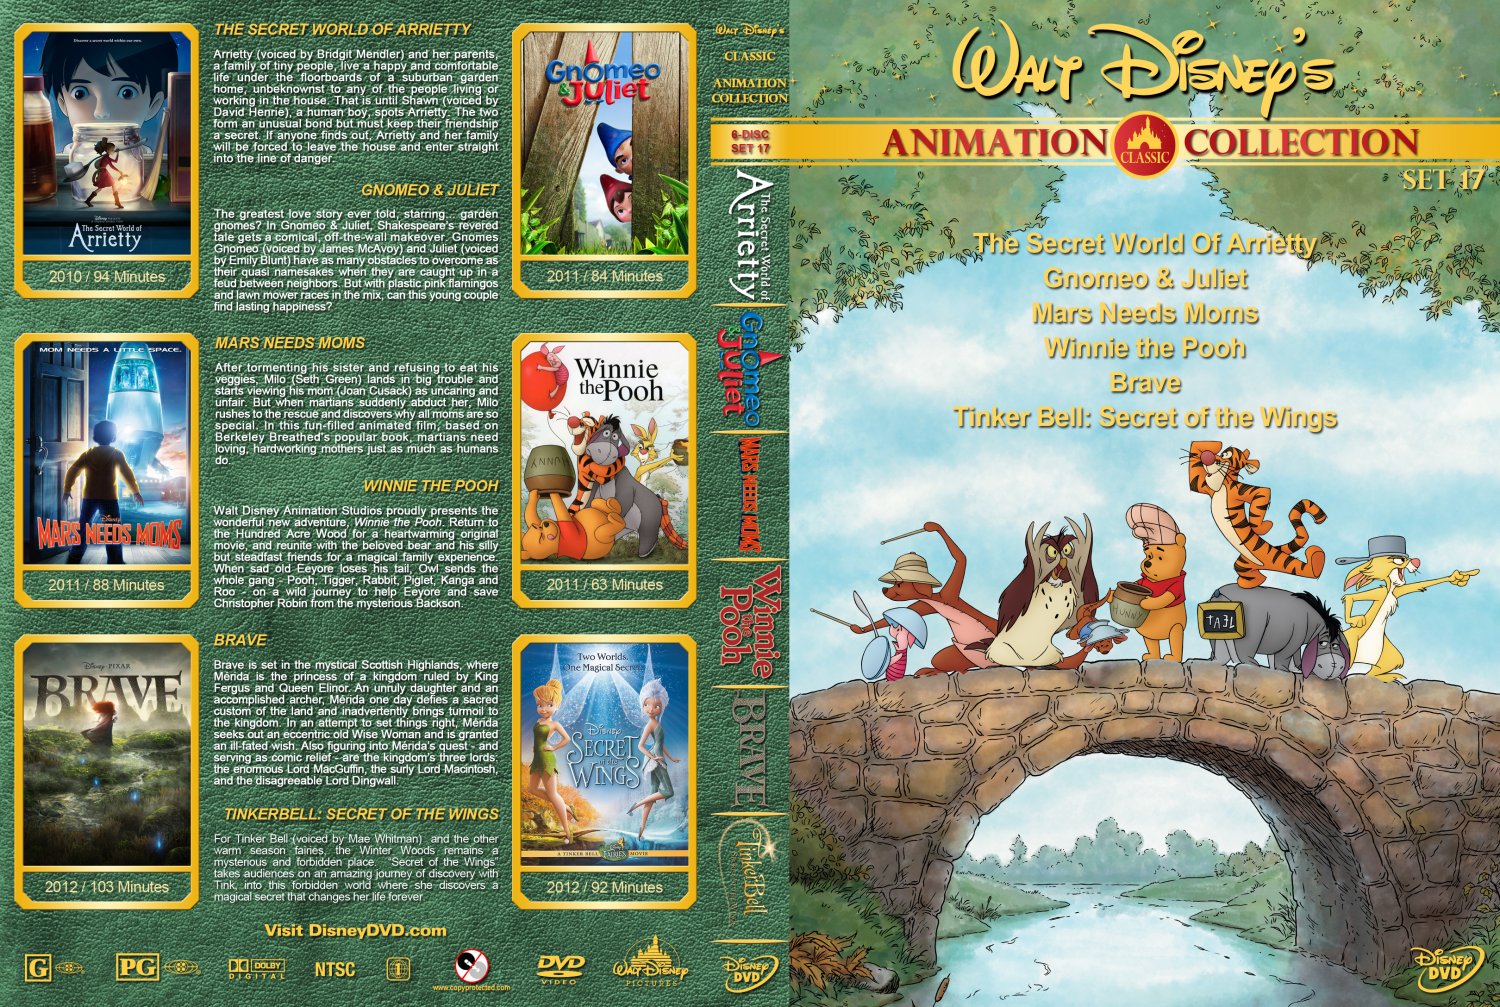 Walt Disney's Classic Animation Collection - Set 17